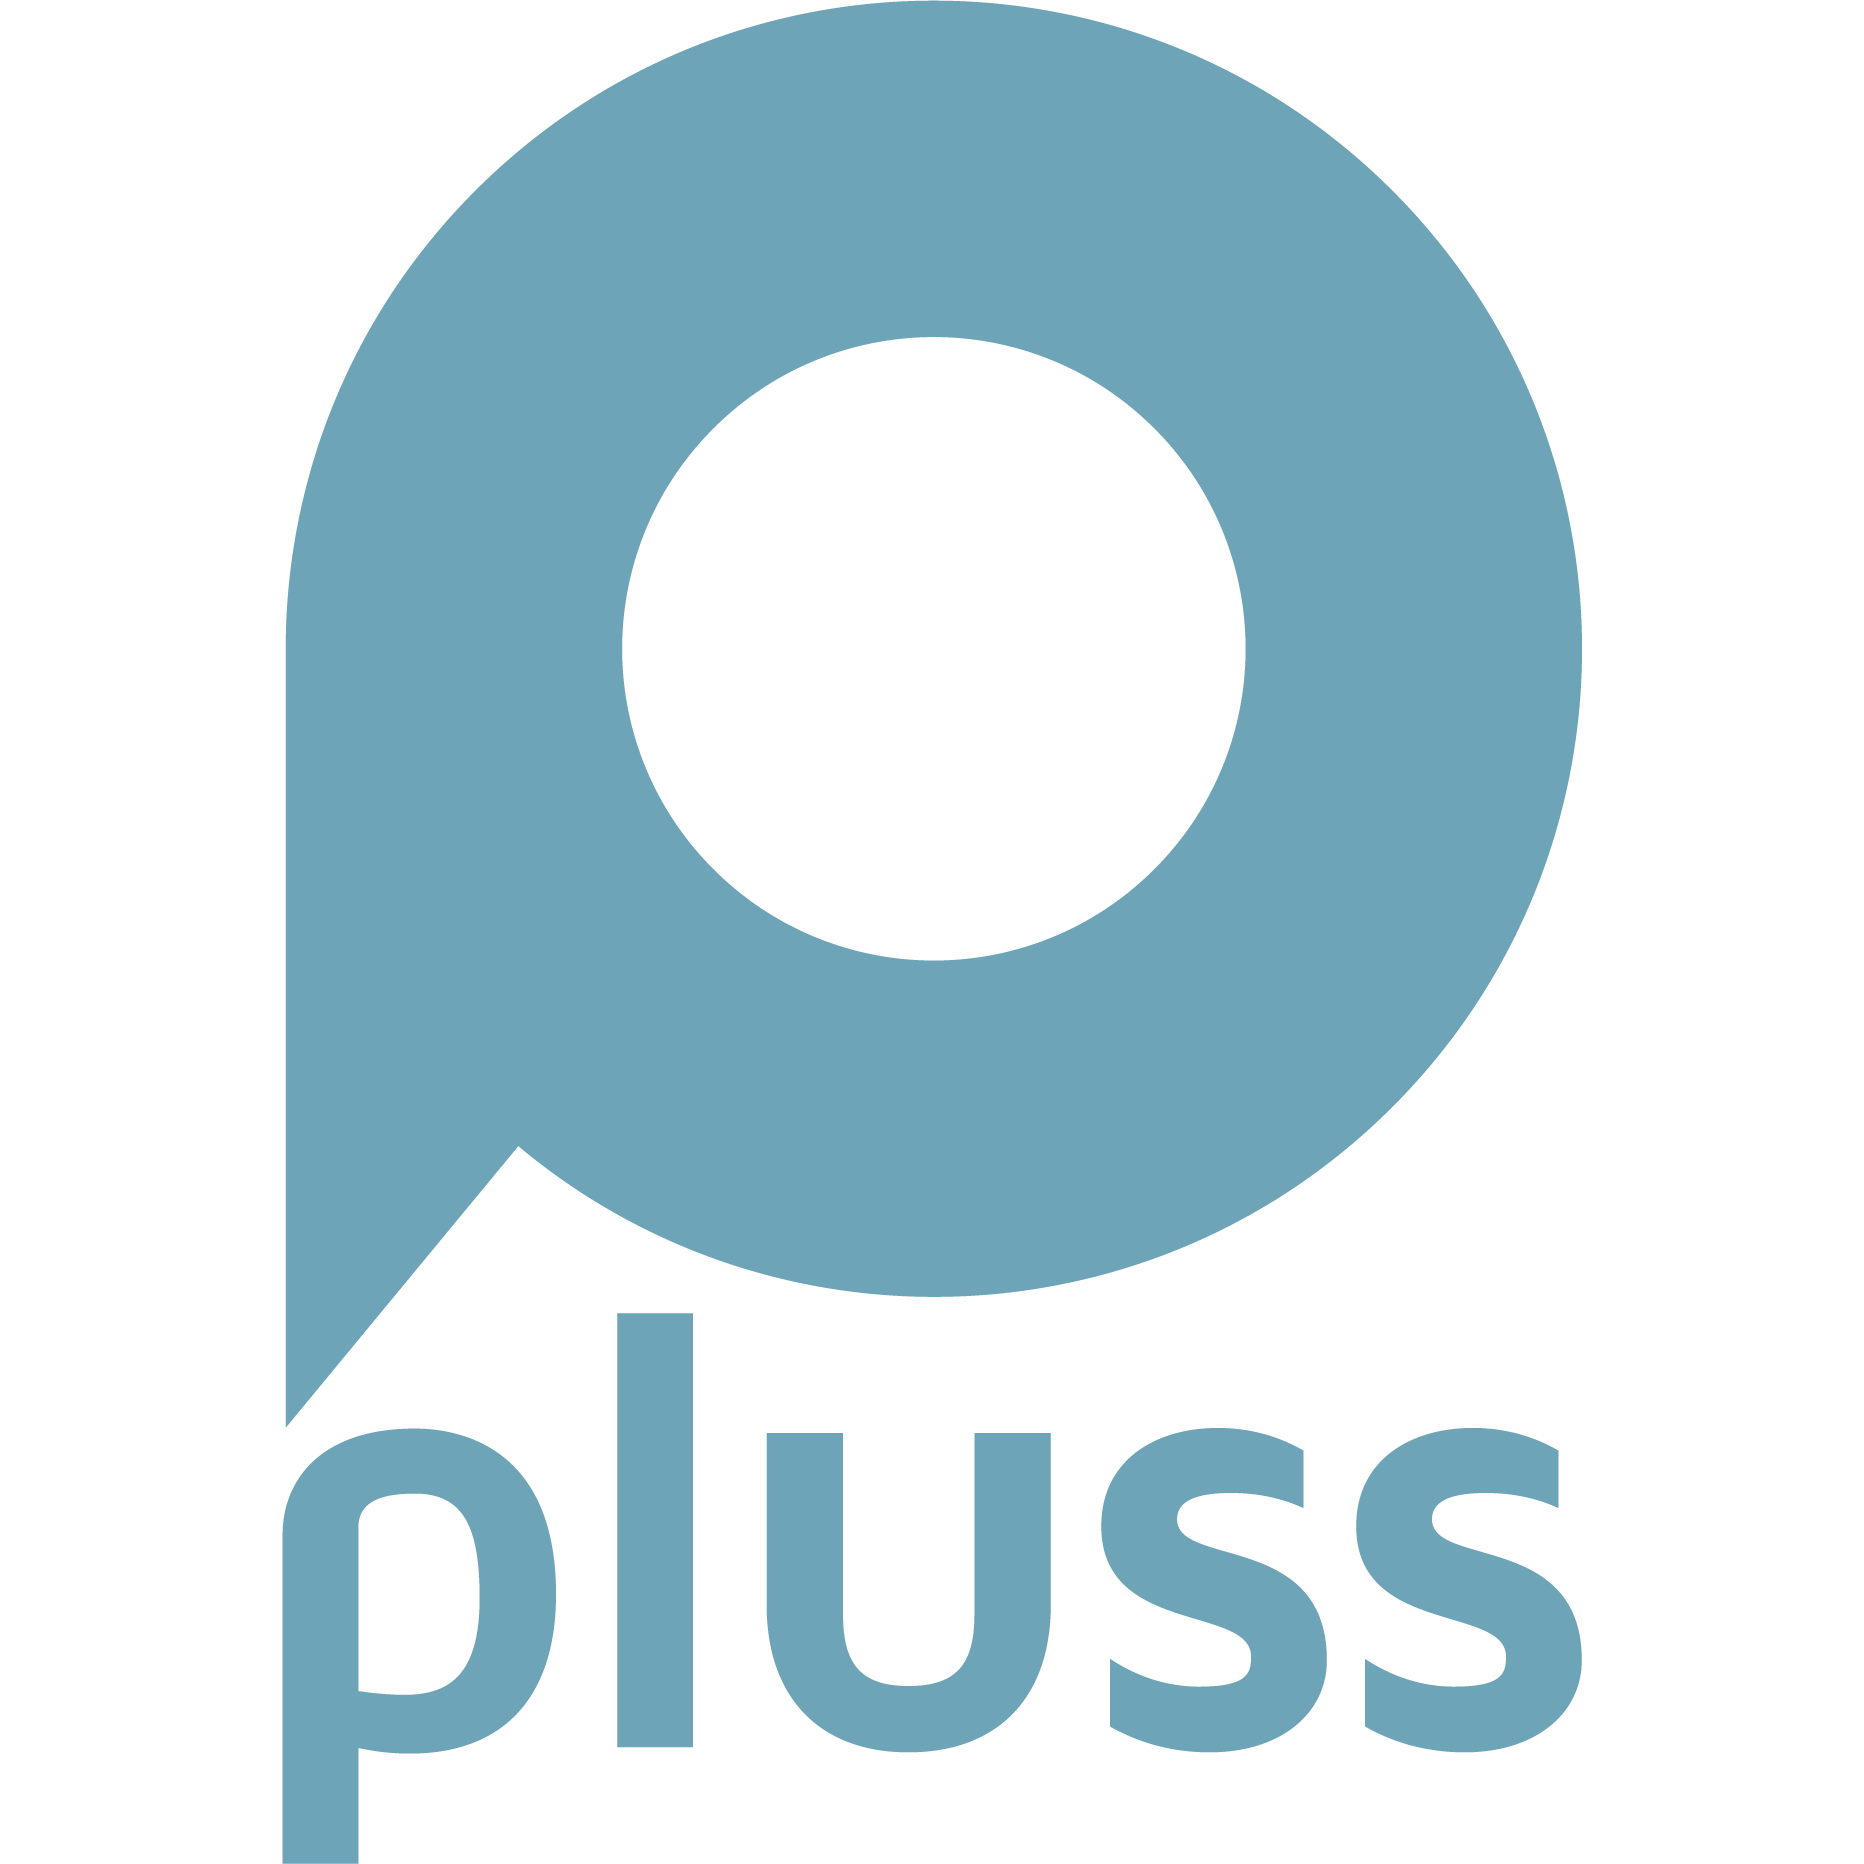 pluss Kiel - Care People (Medizin/Pflege) & Bildung und Soziales Logo